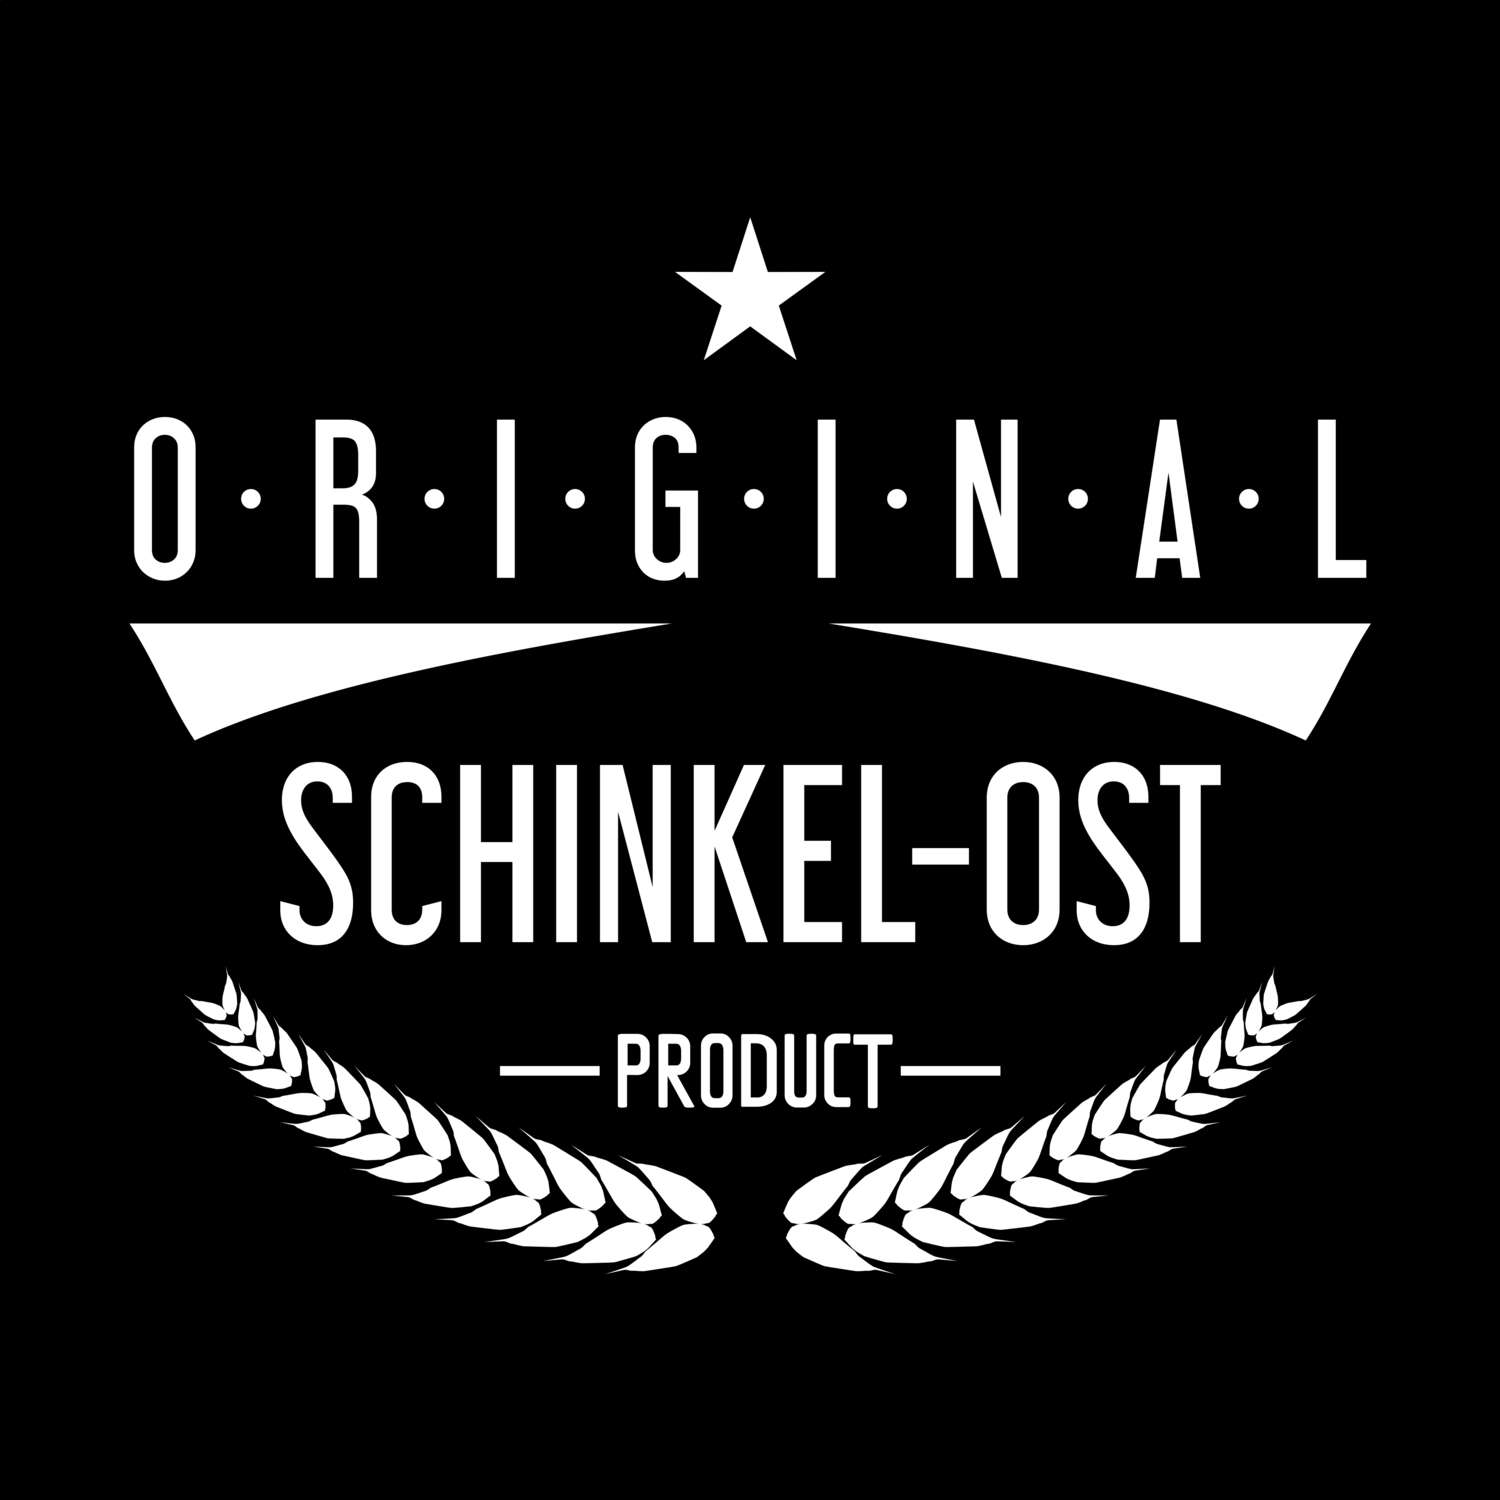 Schinkel-Ost T-Shirt »Original Product«